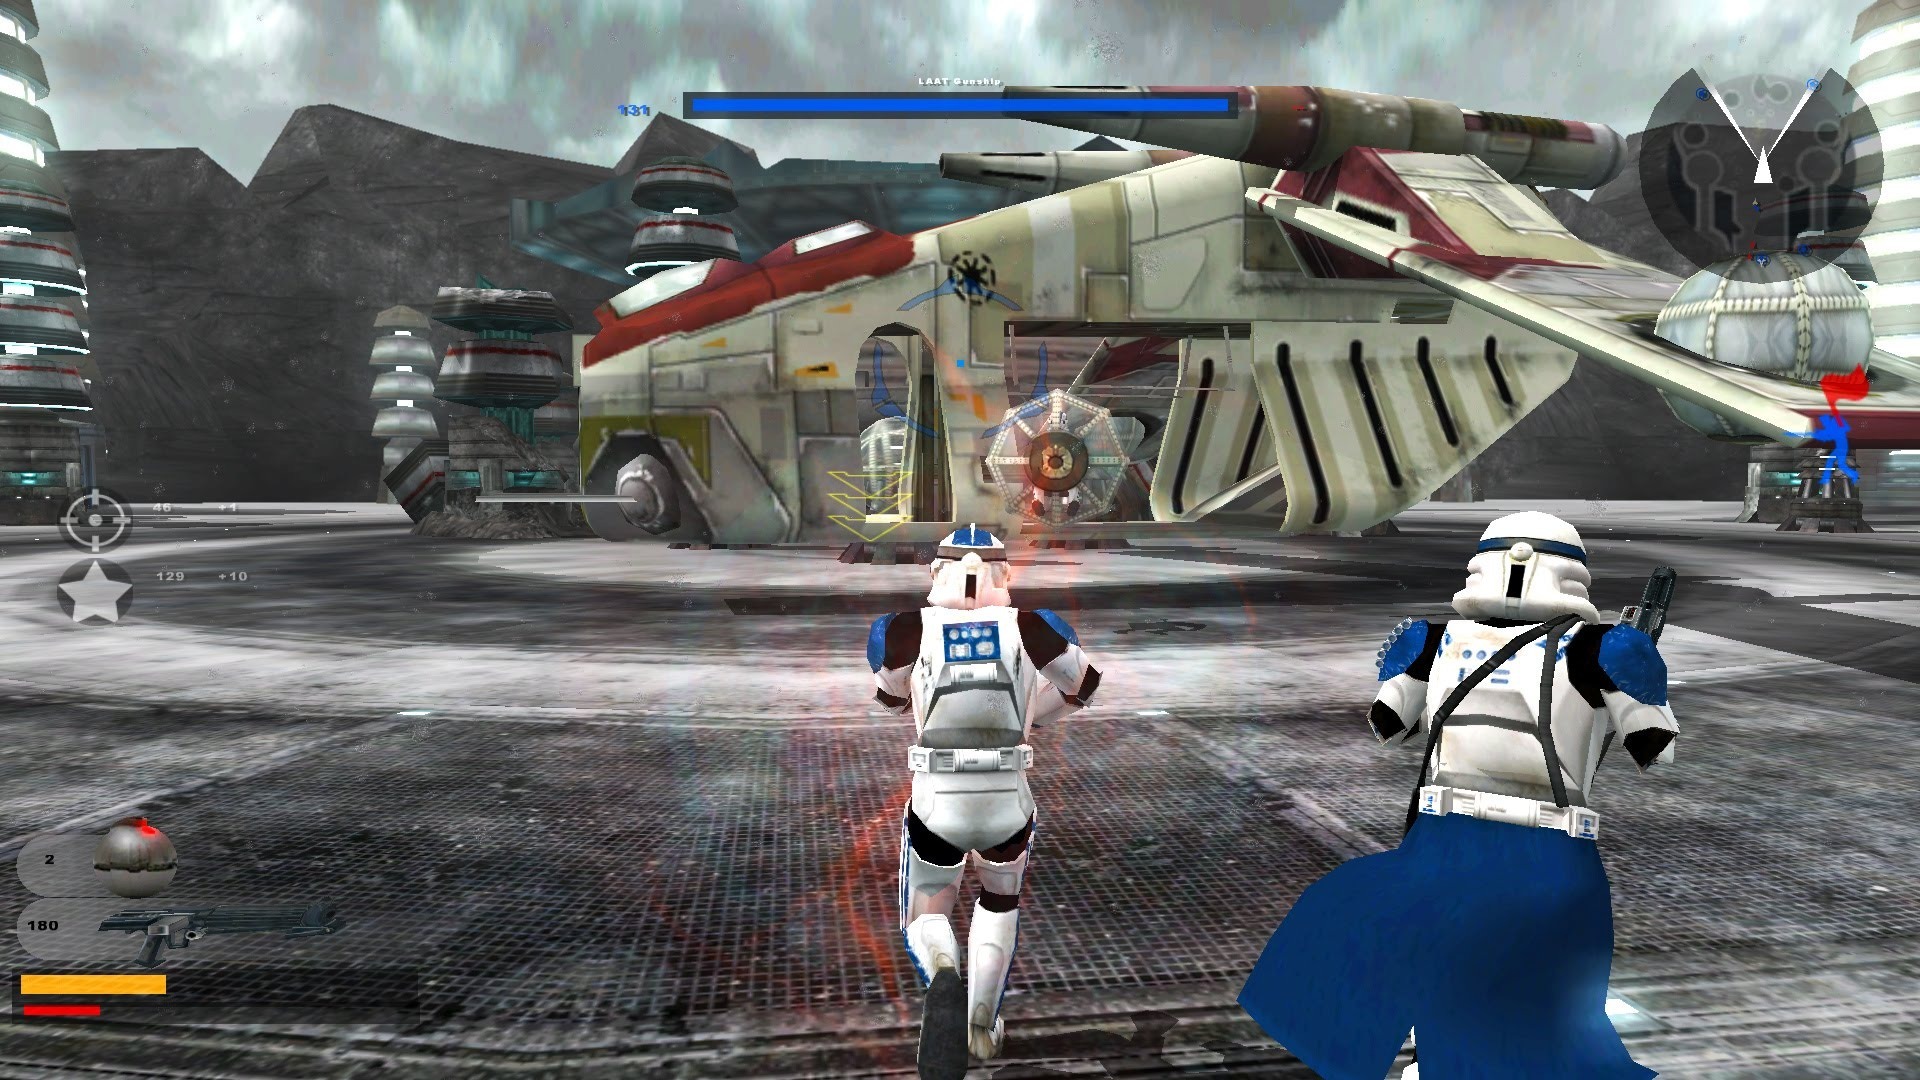 2 star collection. Стар ВАРС батлфронт 2. Звёздные войны батлфронт 2 2005. Стар ВАРС батлфронт 2 геймплей. Star Wars: Battlefront (игра, 2005).